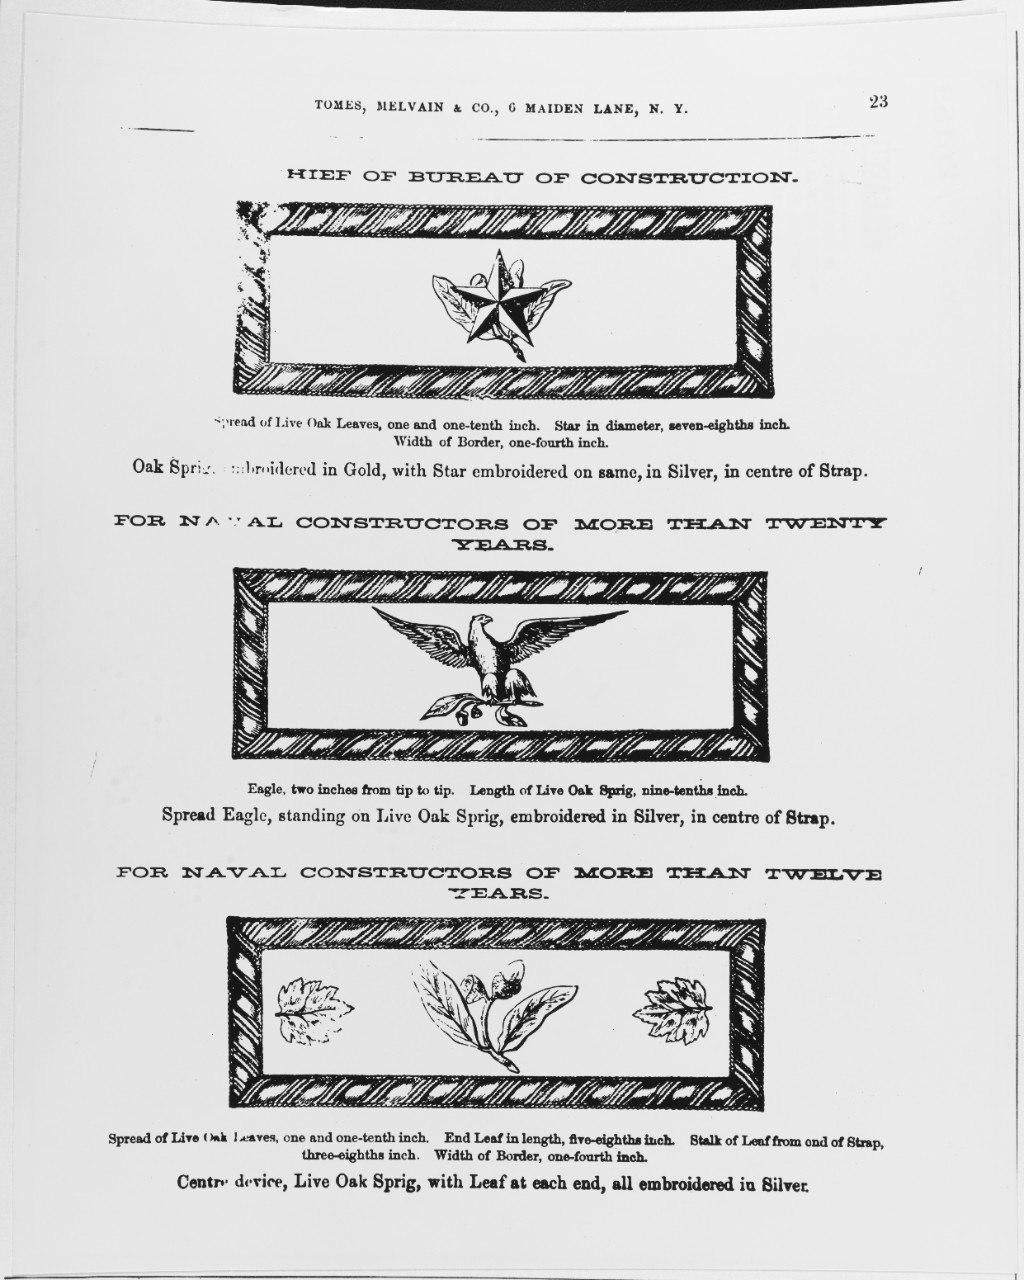 Uniform Regulations, 1864. Shoulder Insignia for Chief of Bureau of Construction, for Naval Constructors